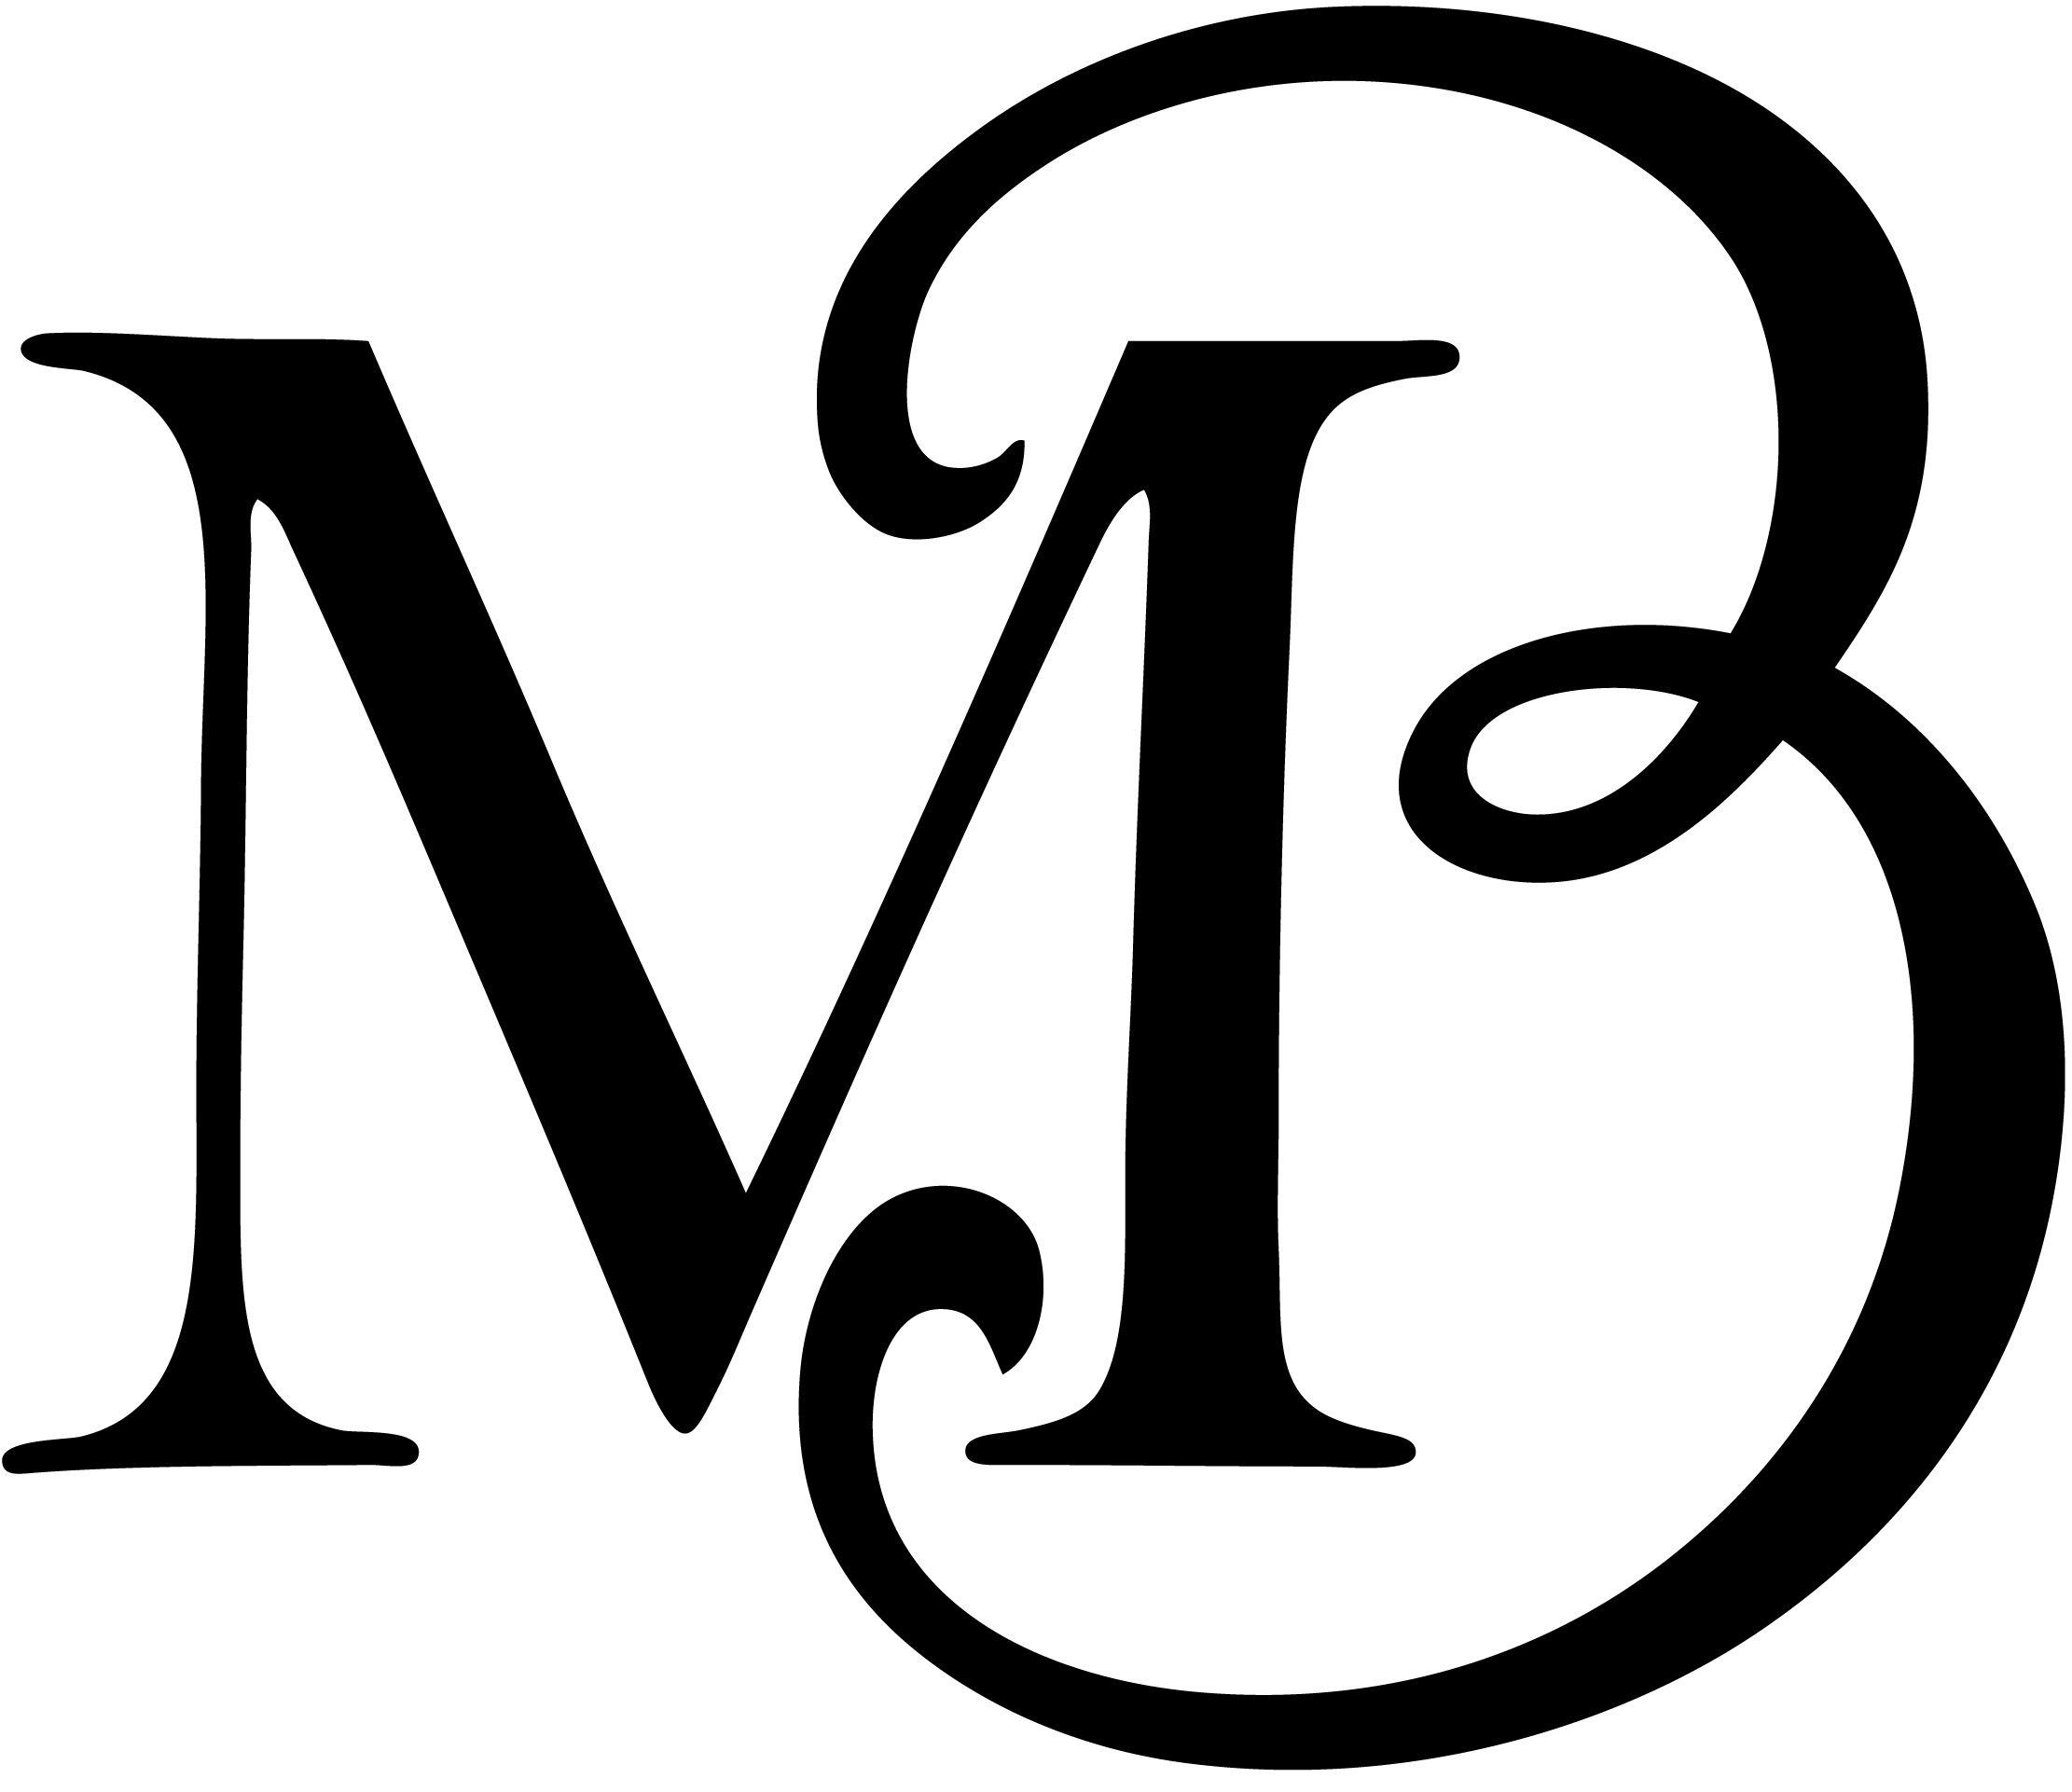 MB Letter Logo - Mb Logos